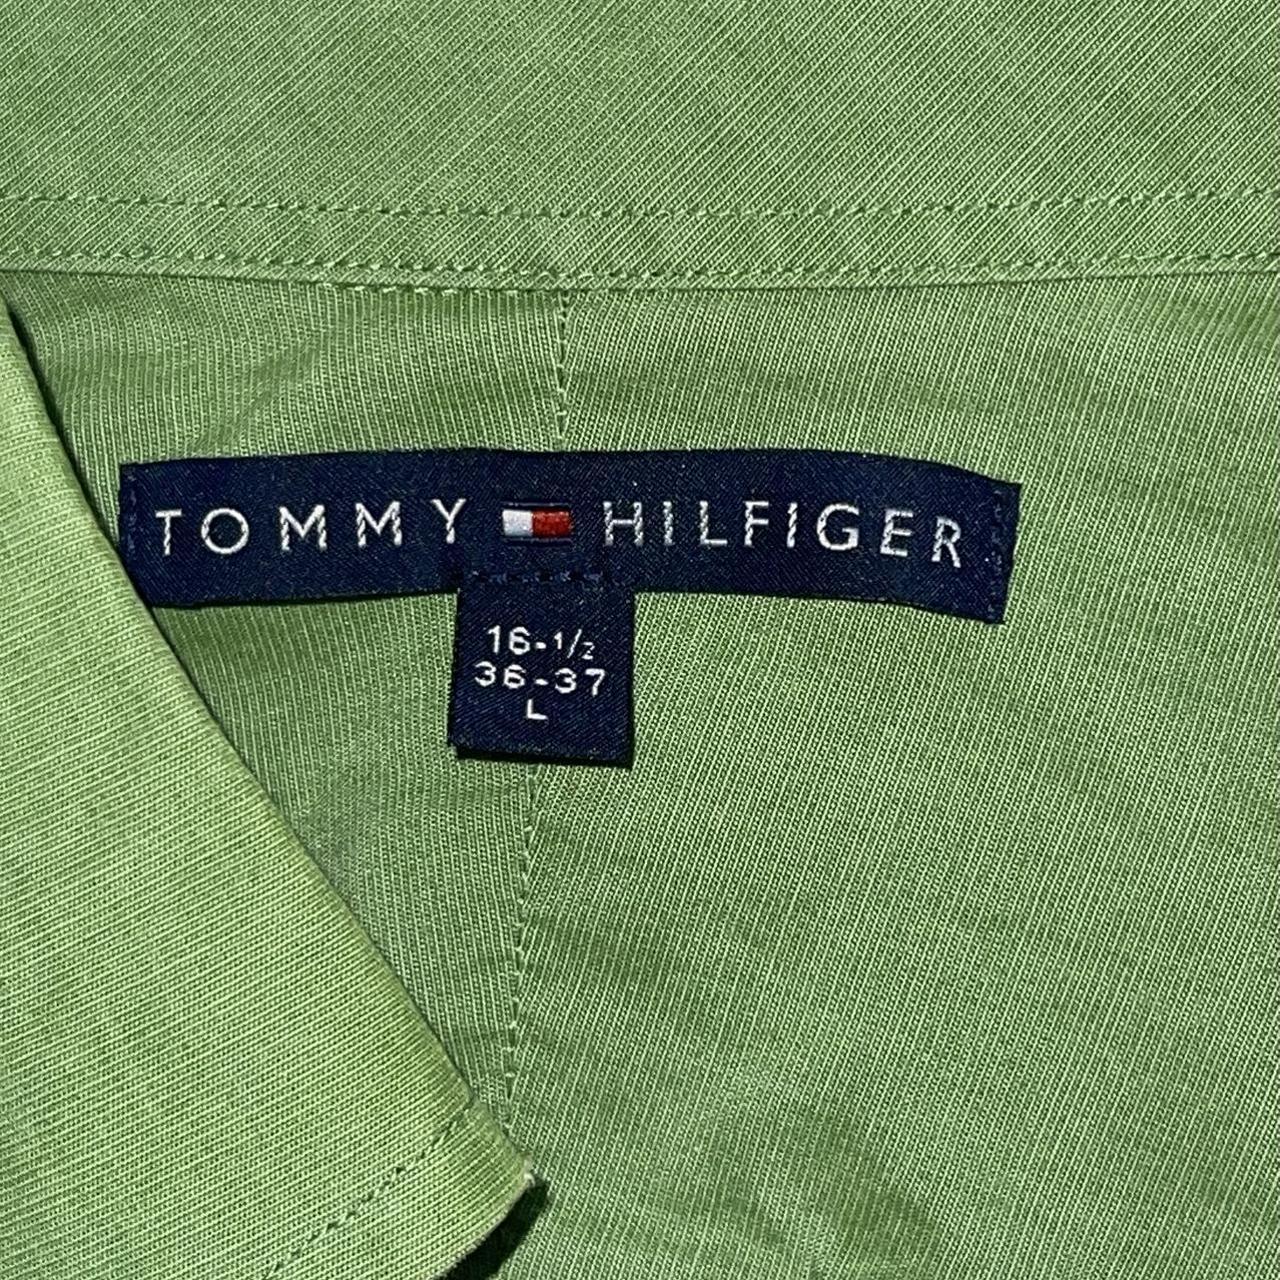 Tommy Hilfiger Men's Green Shirt | Depop